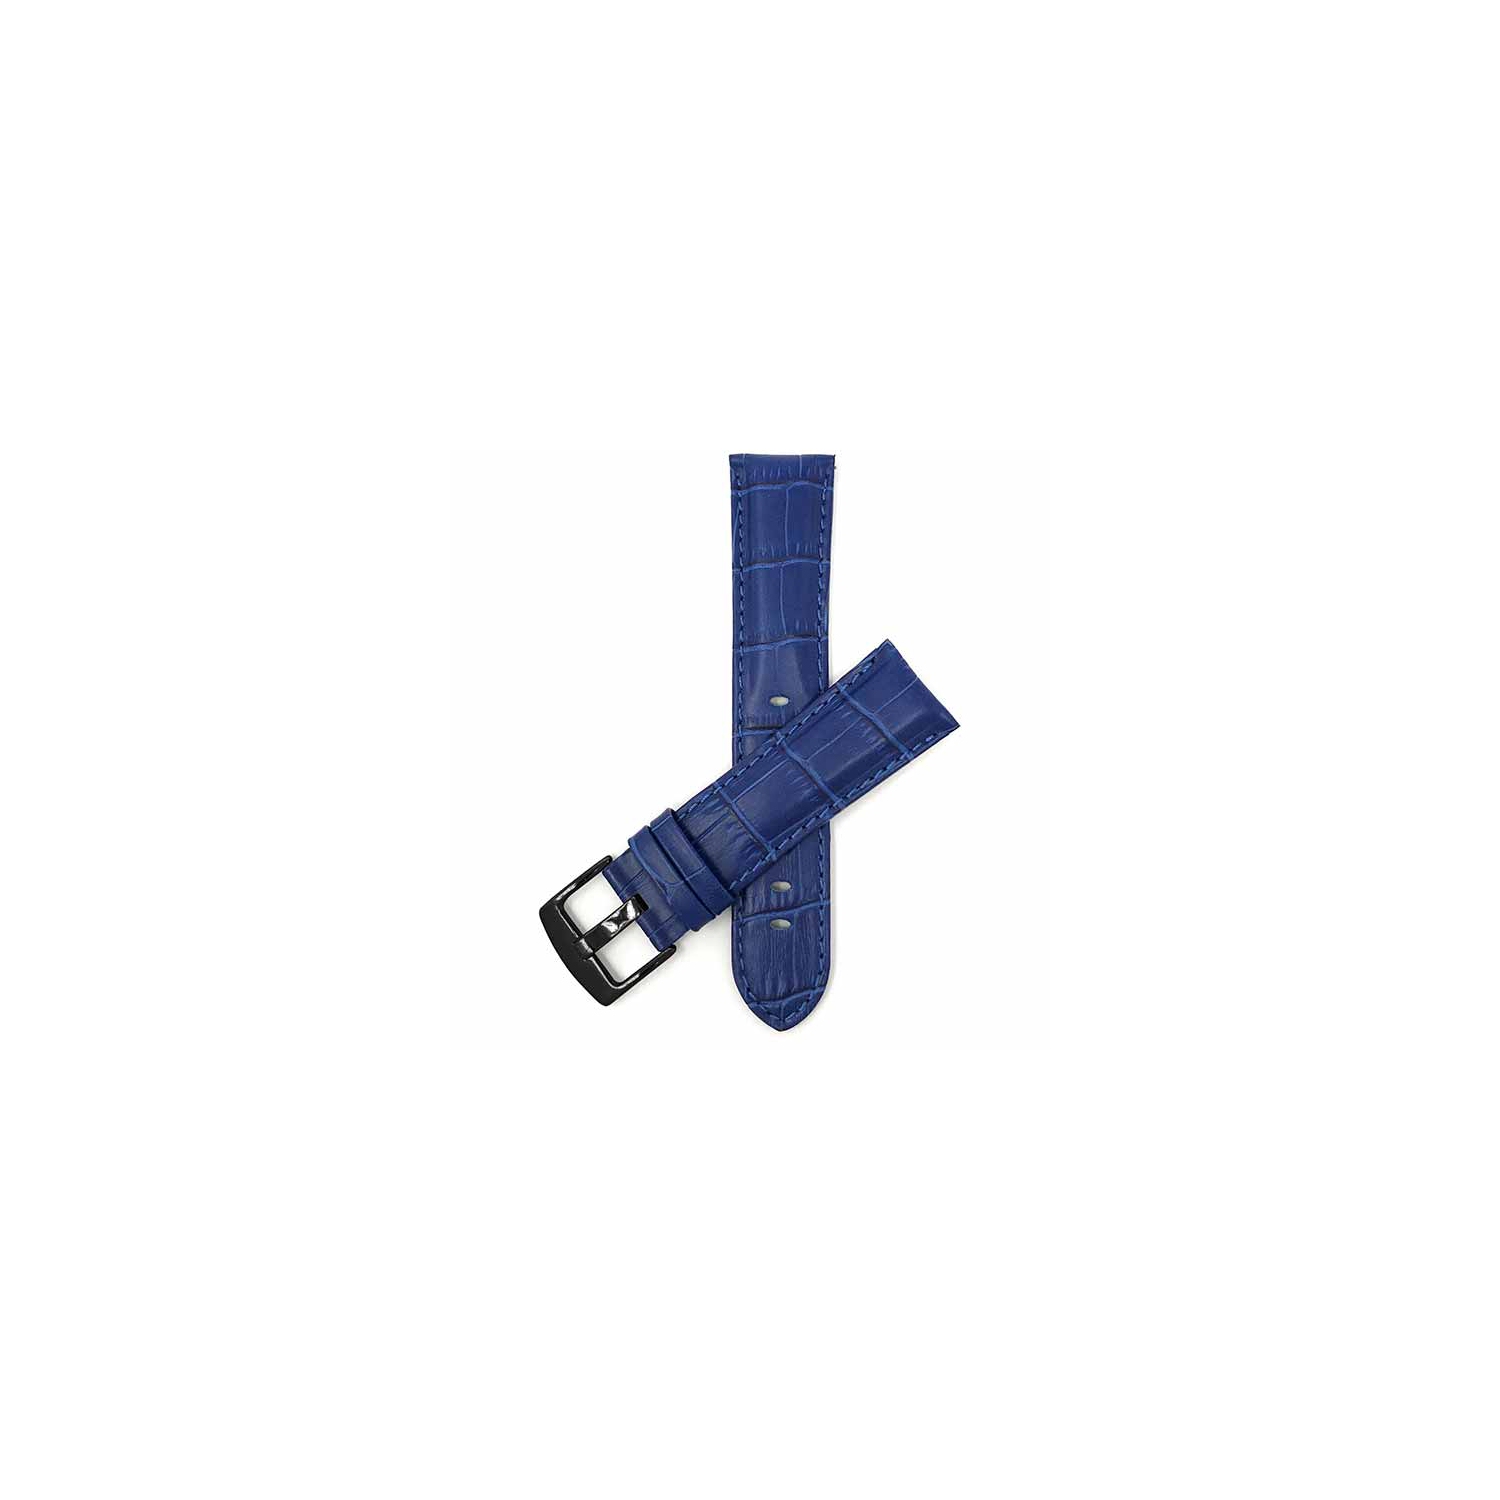 Bandini Mens Leather Alligator Pattern Smart Watch Band Strap For Garmin Forerunner, Vivoactive 4 - 22mm, Blue / Black Buckle